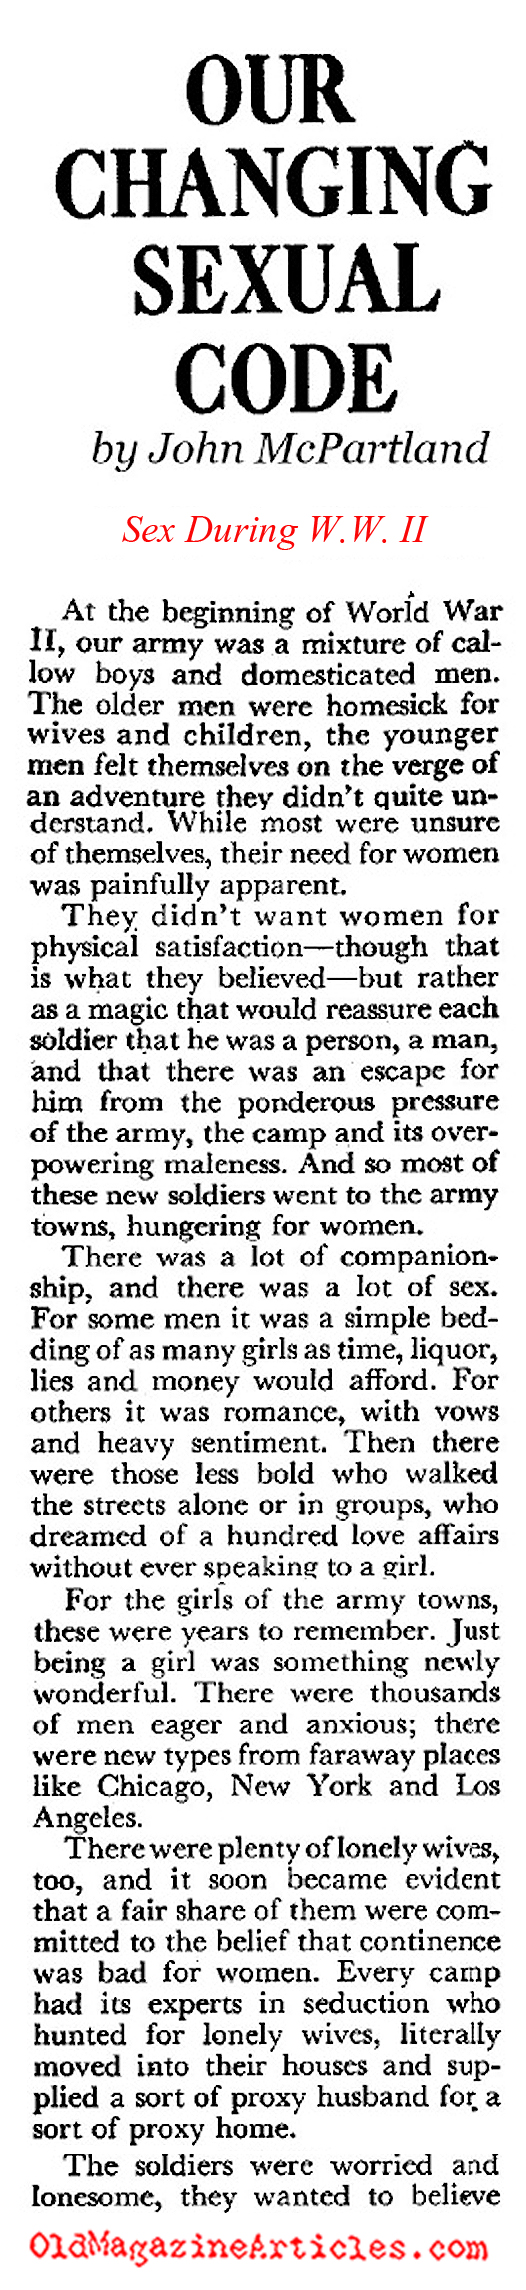 Sex During the Second World War (Coronet Magazine, 1955)